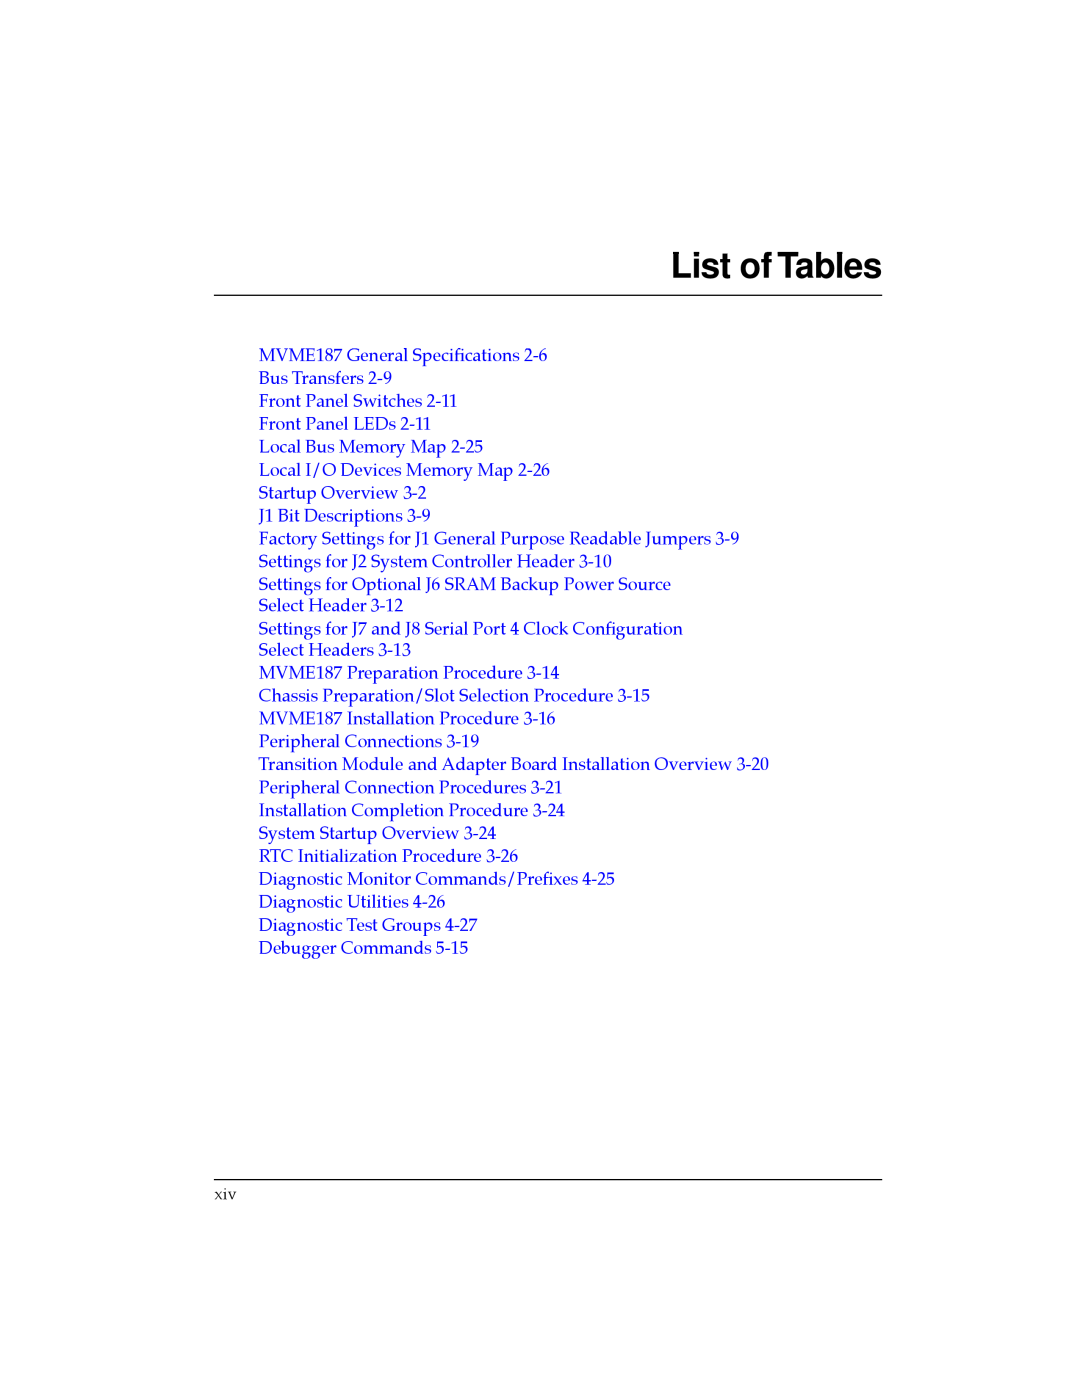 Motorola MVME187 manual List of Tables 